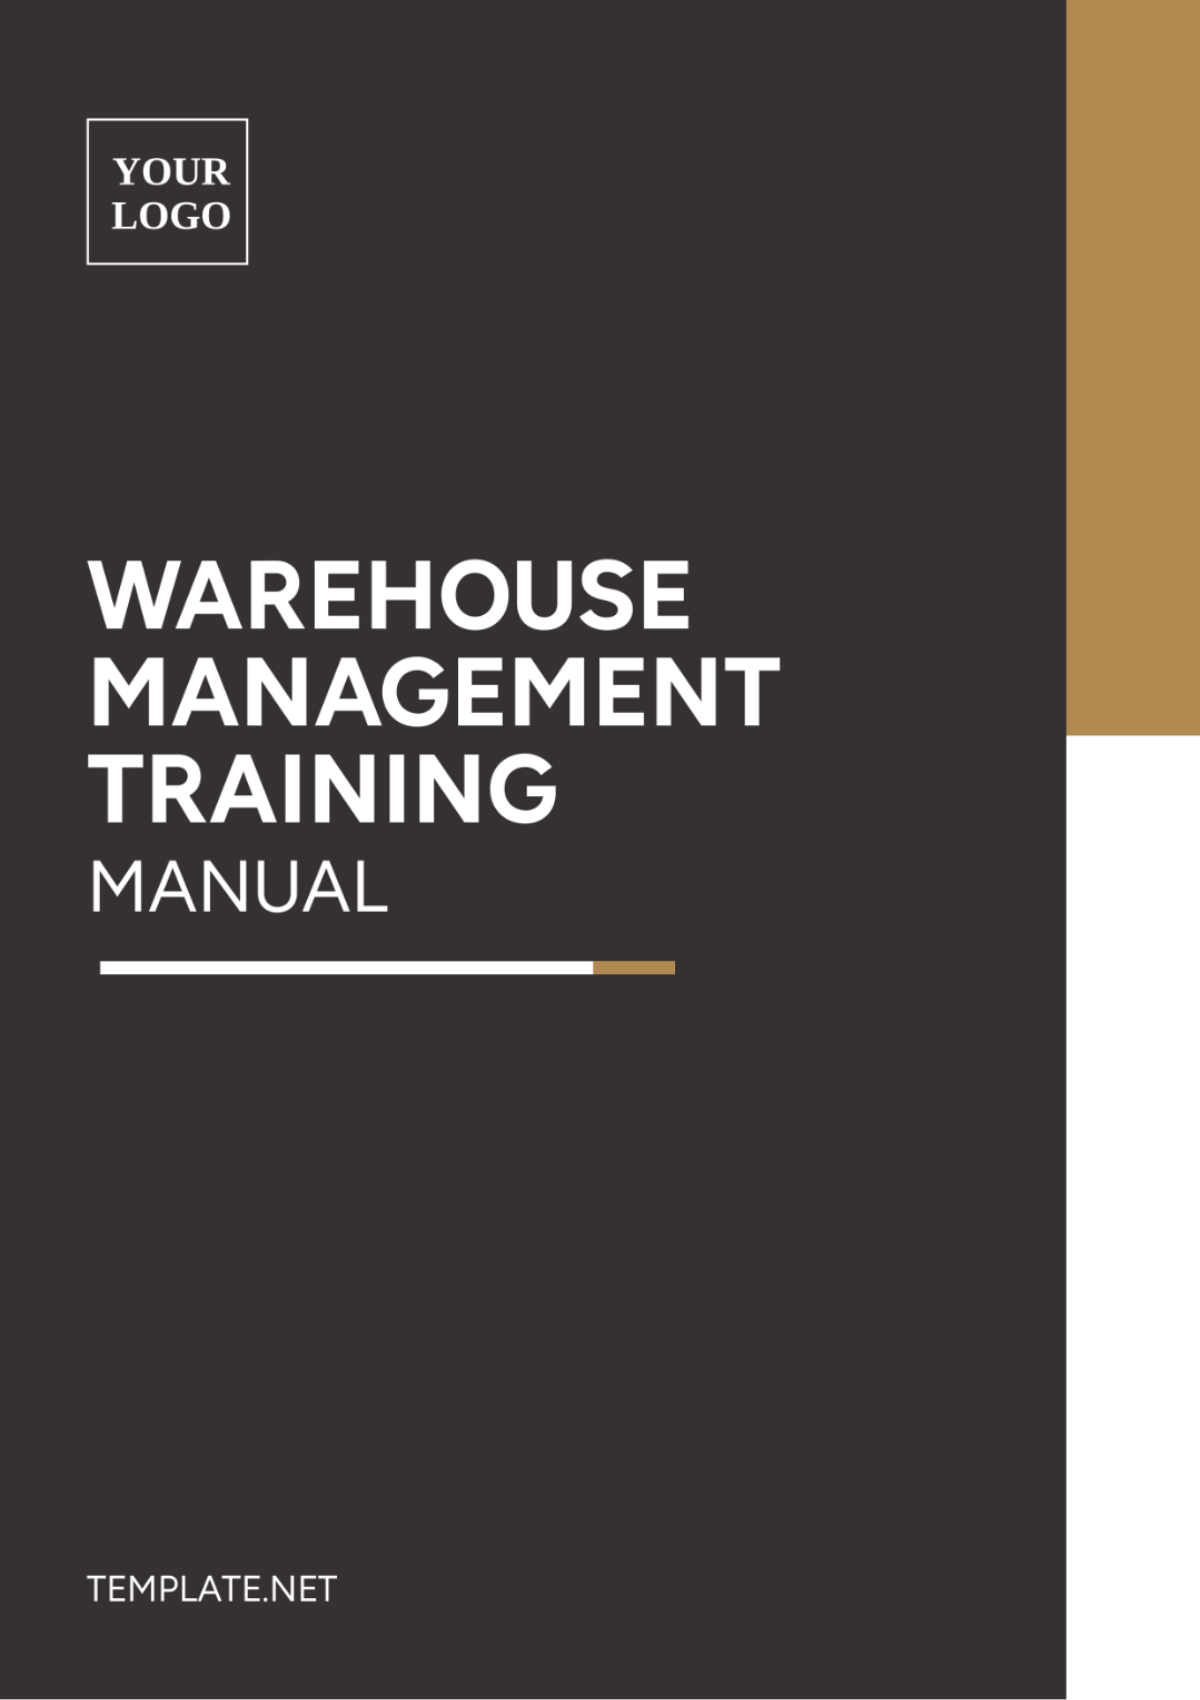 Warehouse Management Training Manual Template